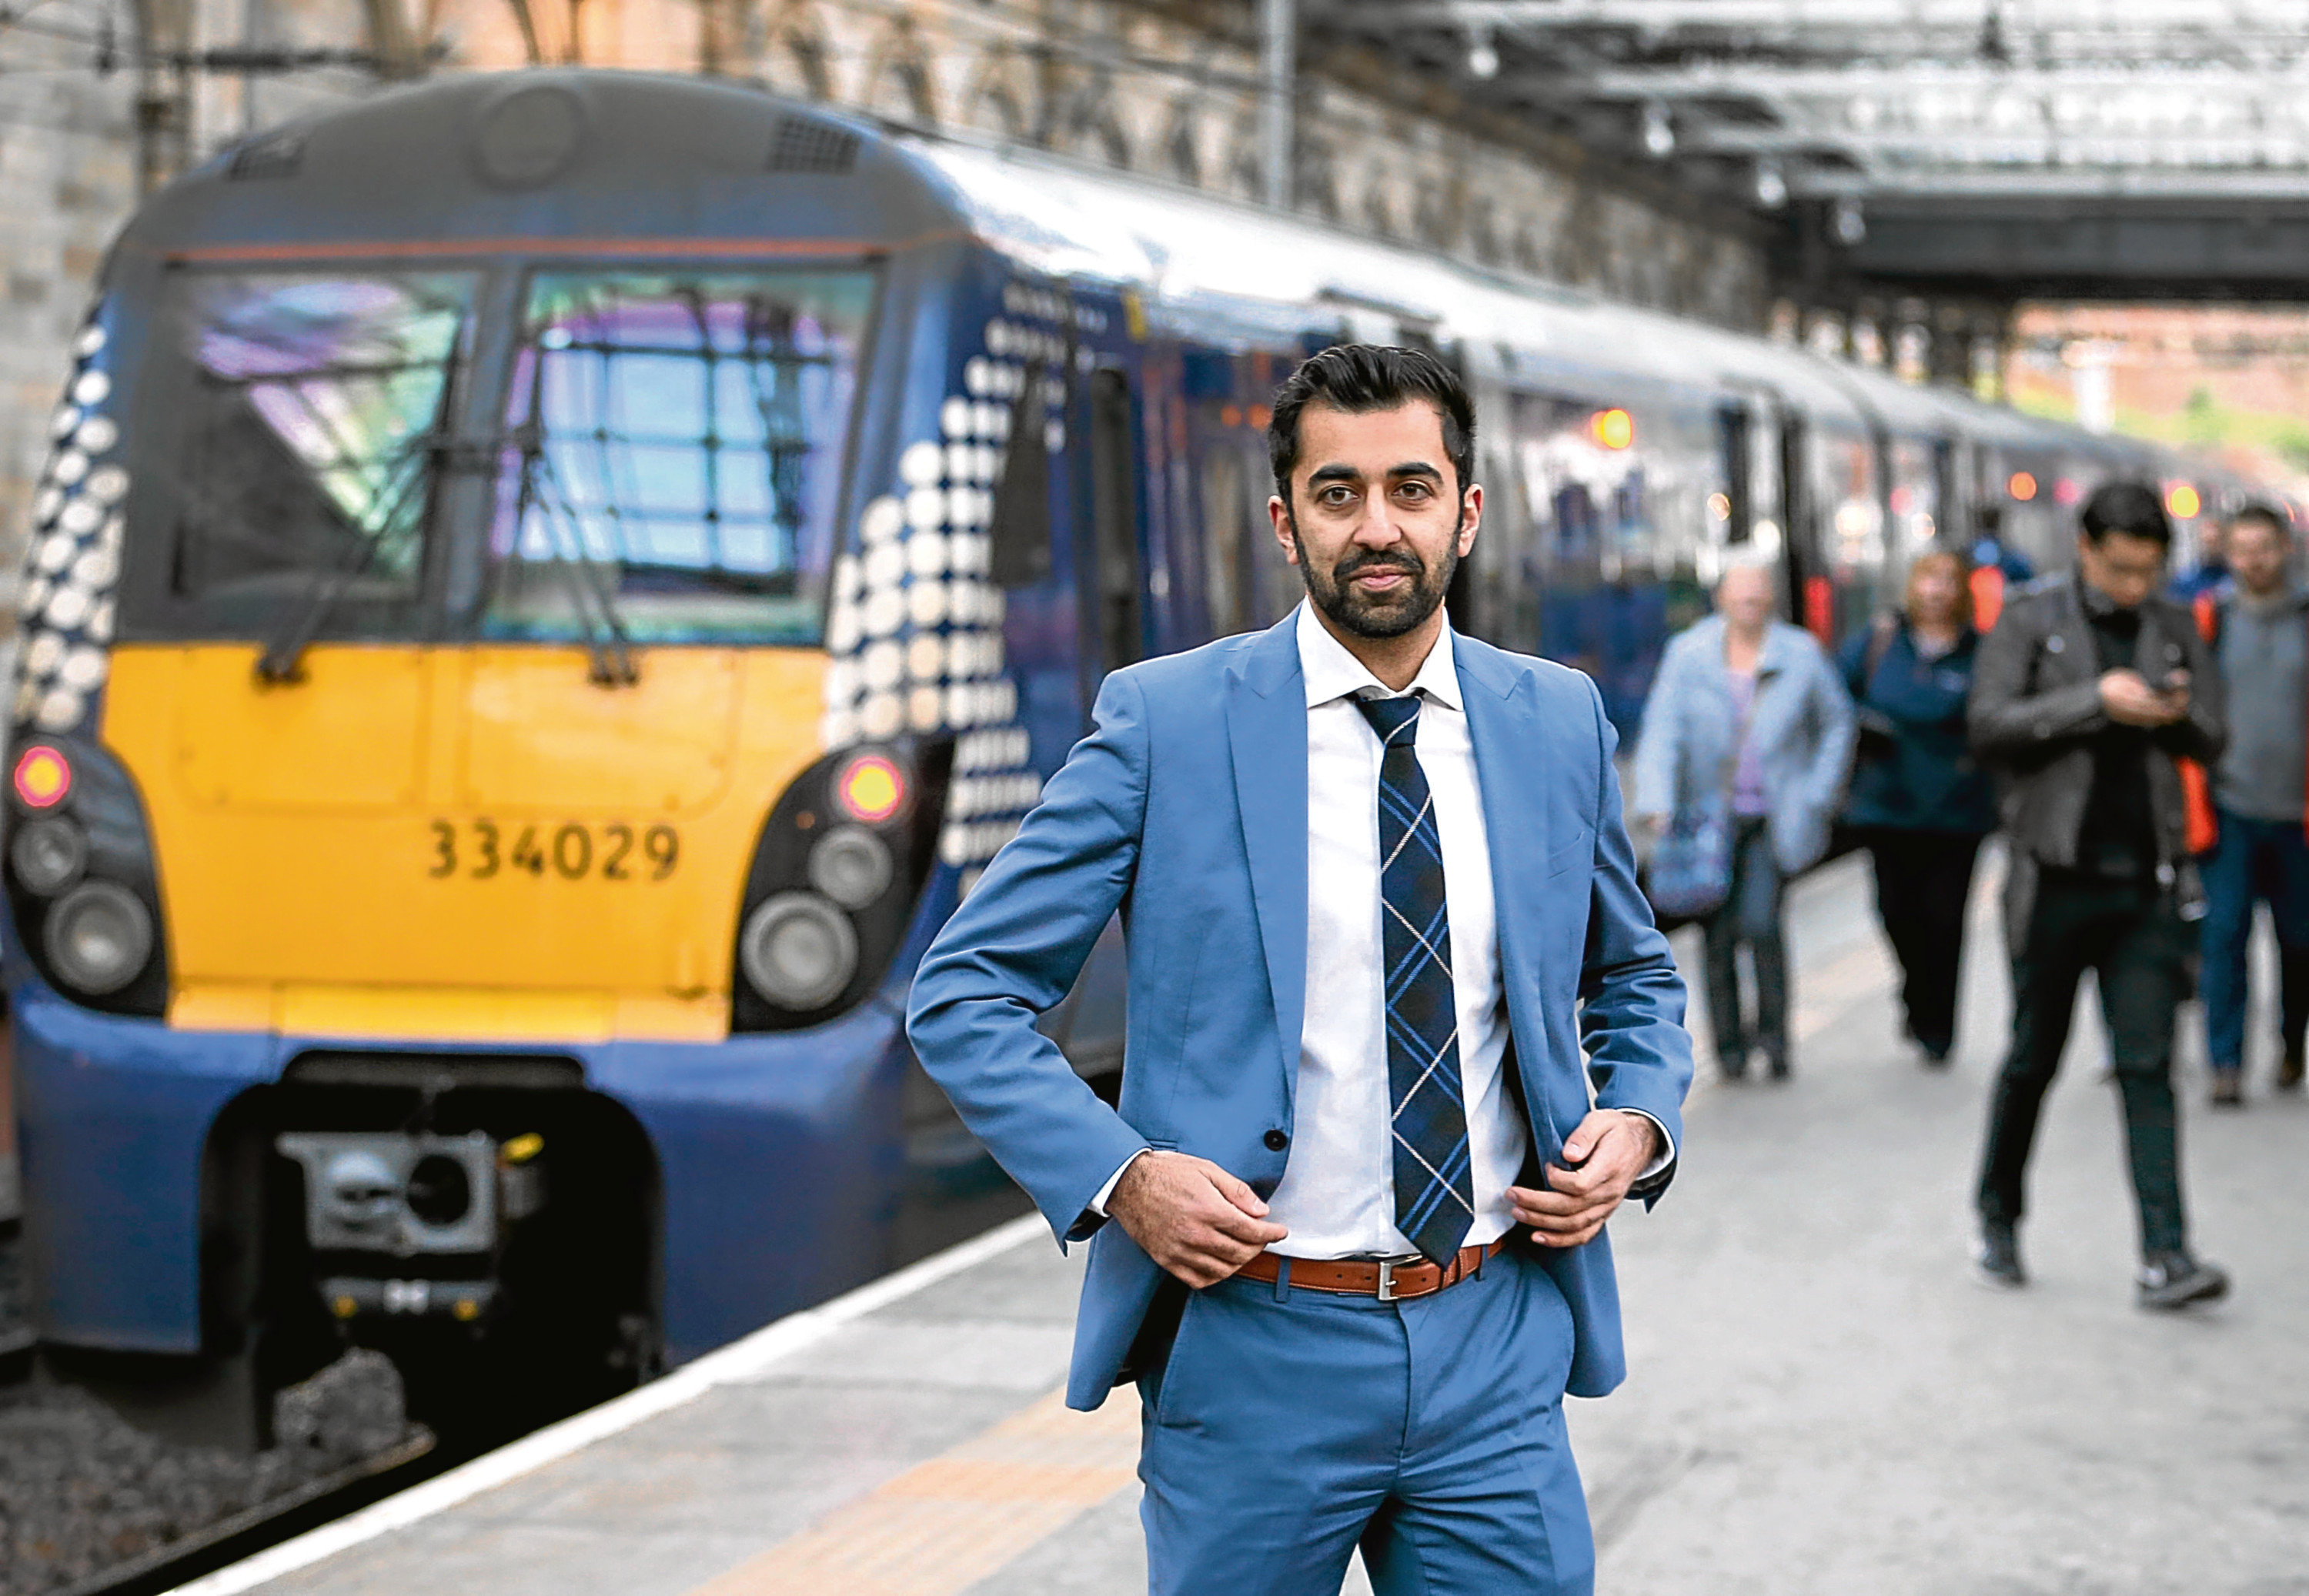 Transport Minister Humza Yousaf at Edinburgh Waverley station (Jane Barlow/PA Wire)